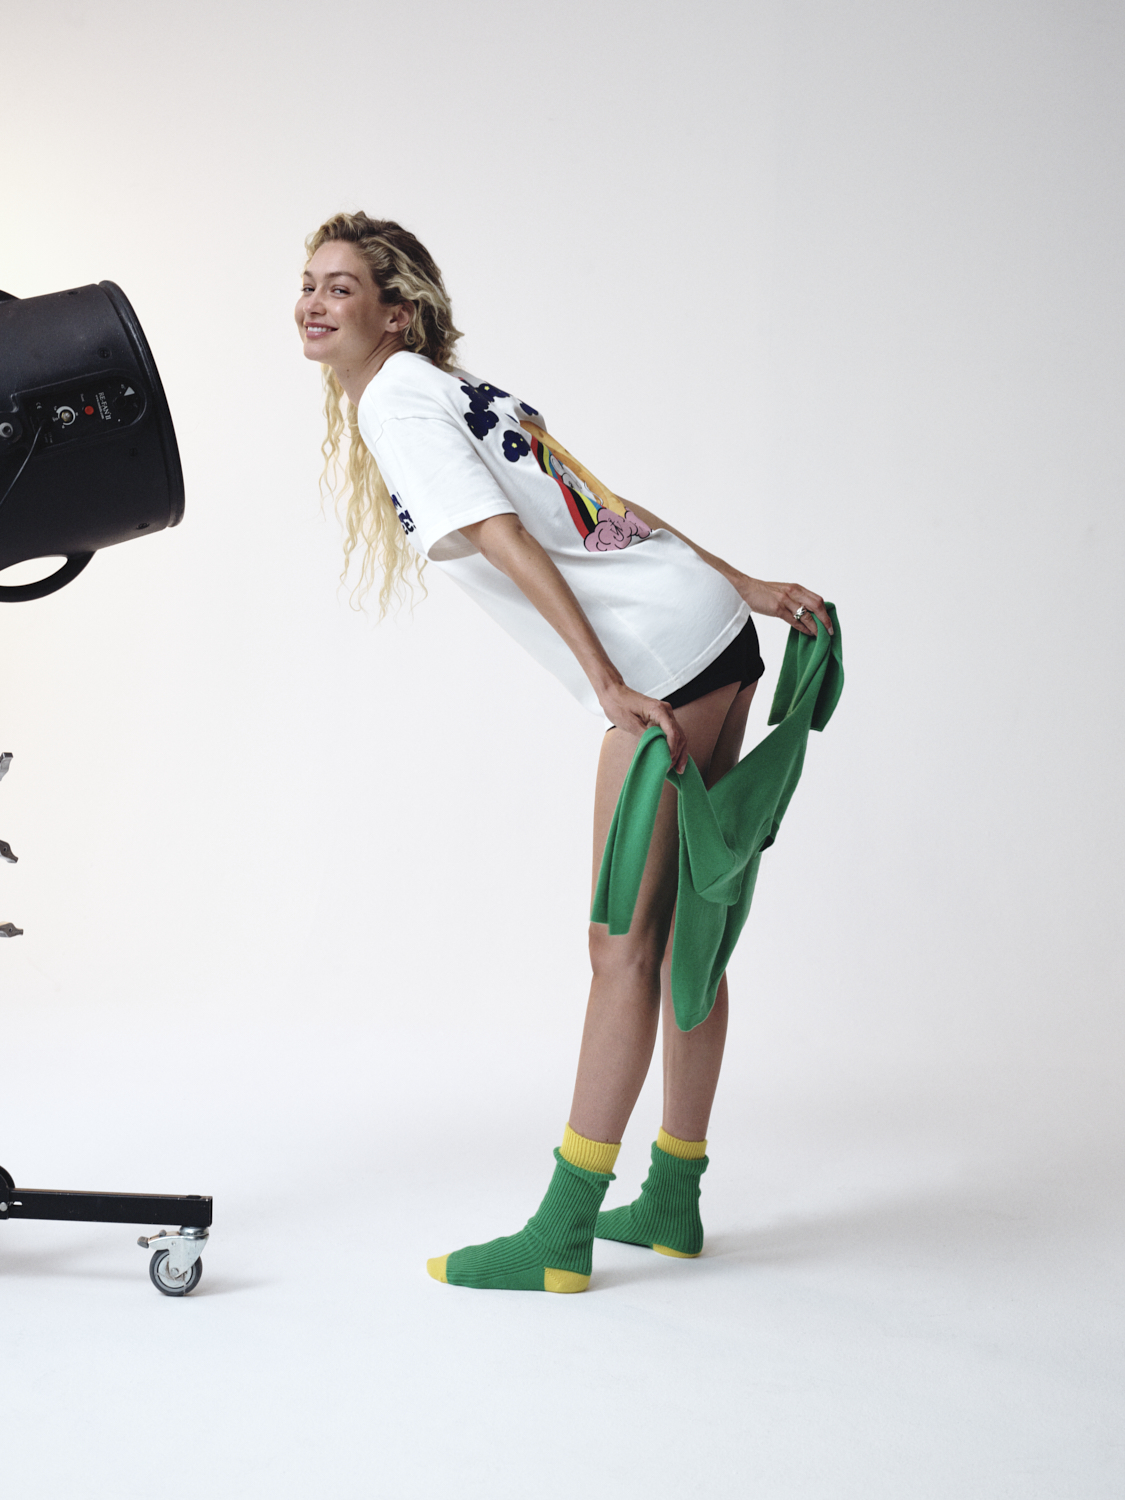 Gigi Hadid On Launching Her Own Brand And The Joys Of Motherhood | PORTER